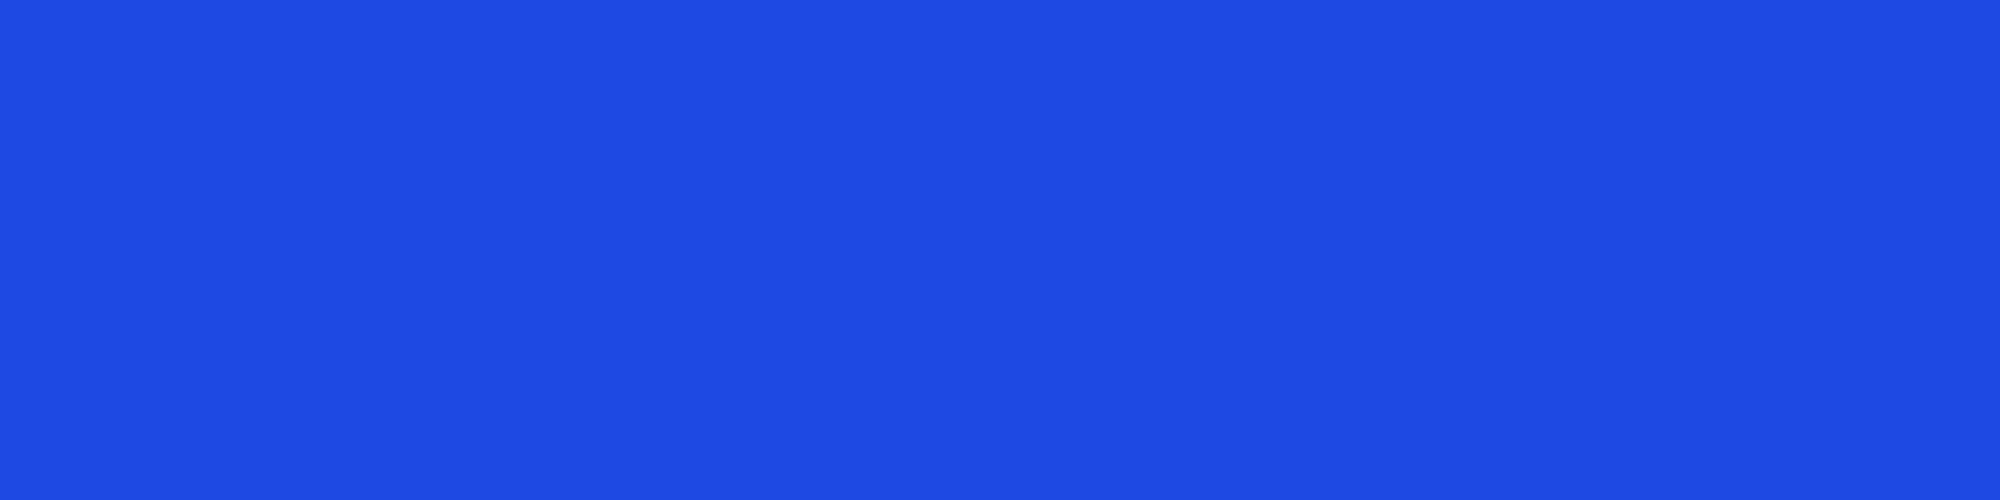 cobalt-blue-banner